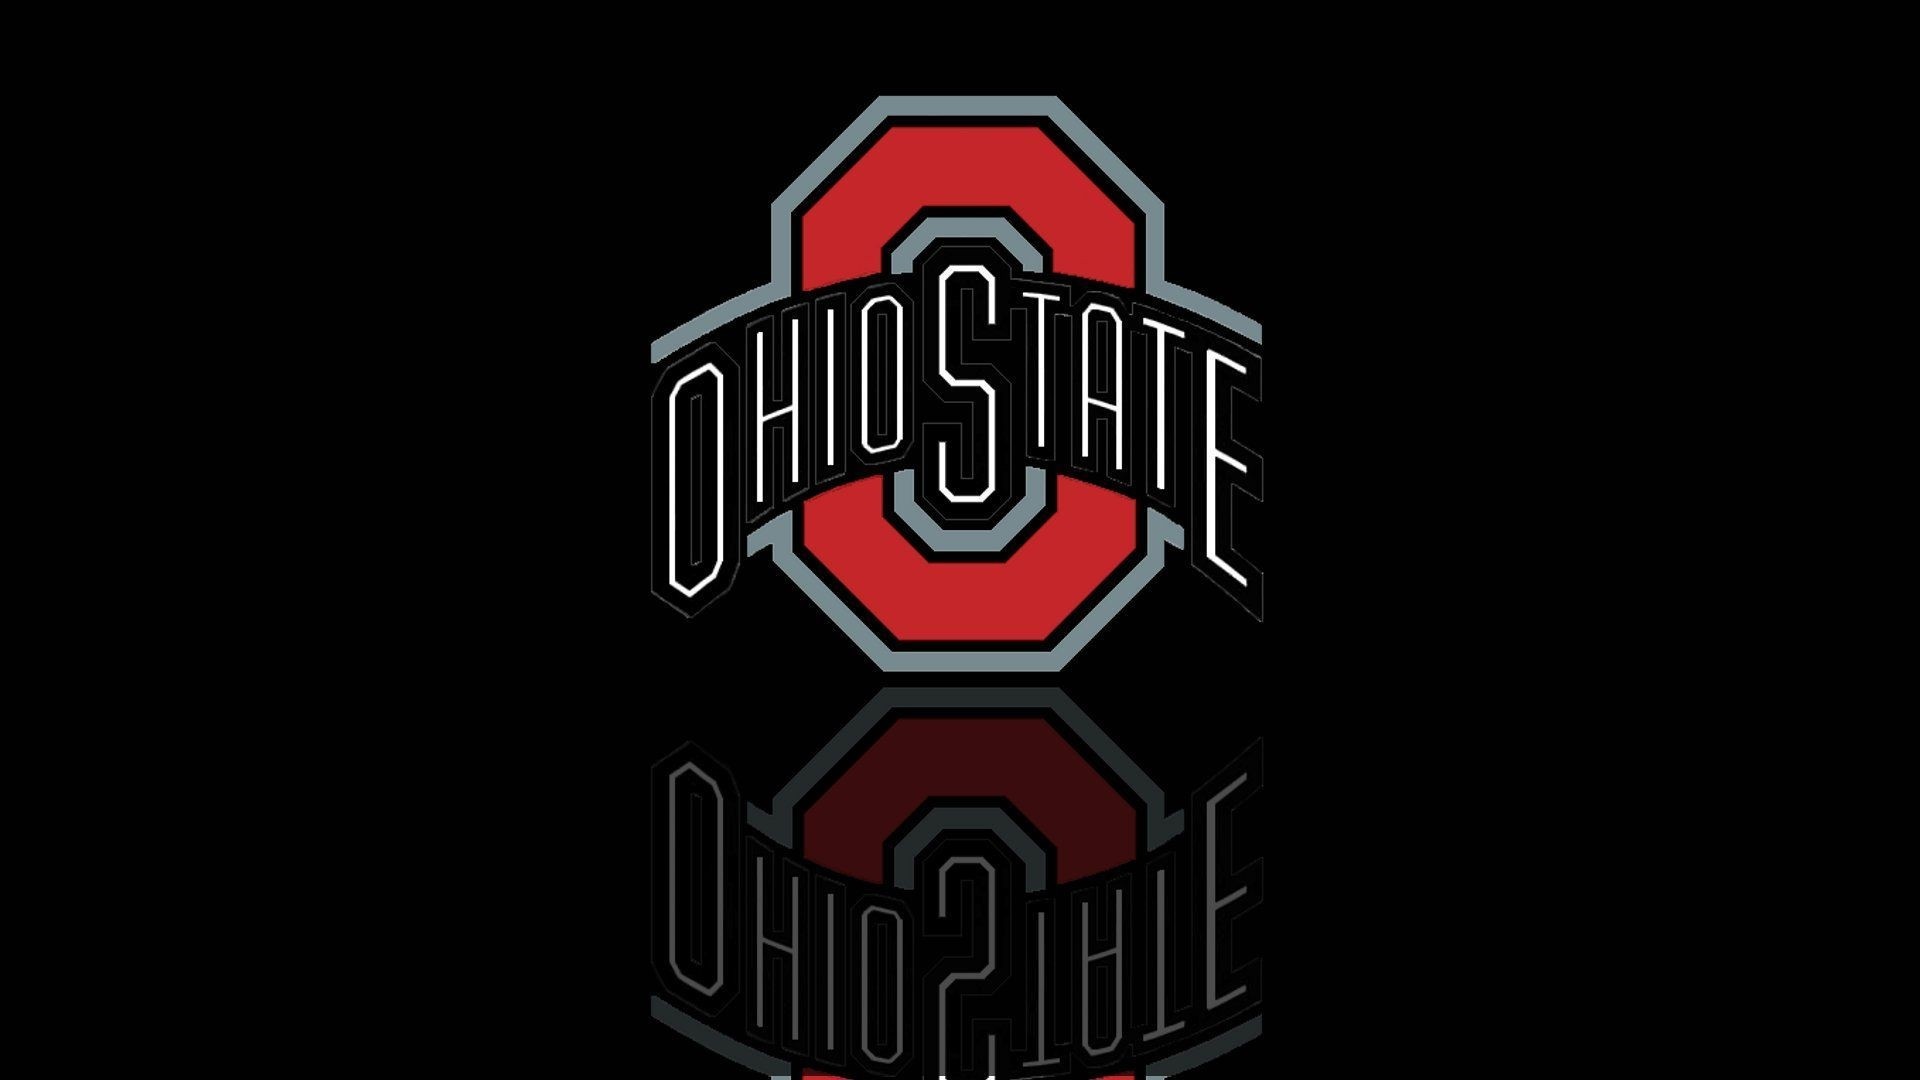 Ohio State Image